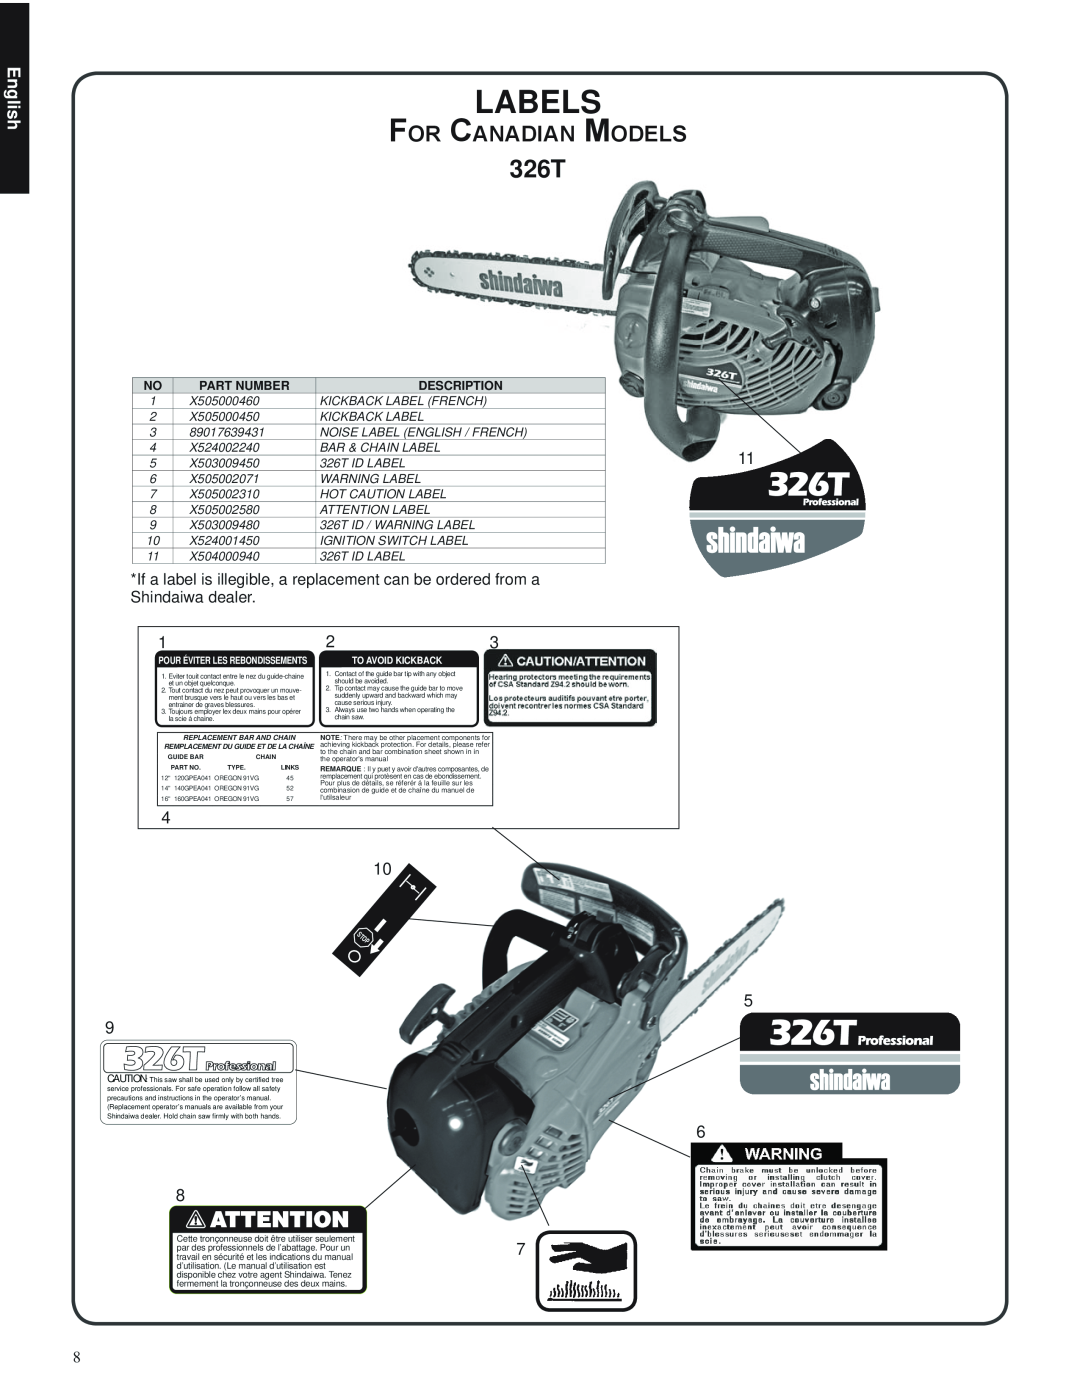 Shindaiwa 82085 manual Labels, For Canadian Models, 326T, English, Part Number, Description 